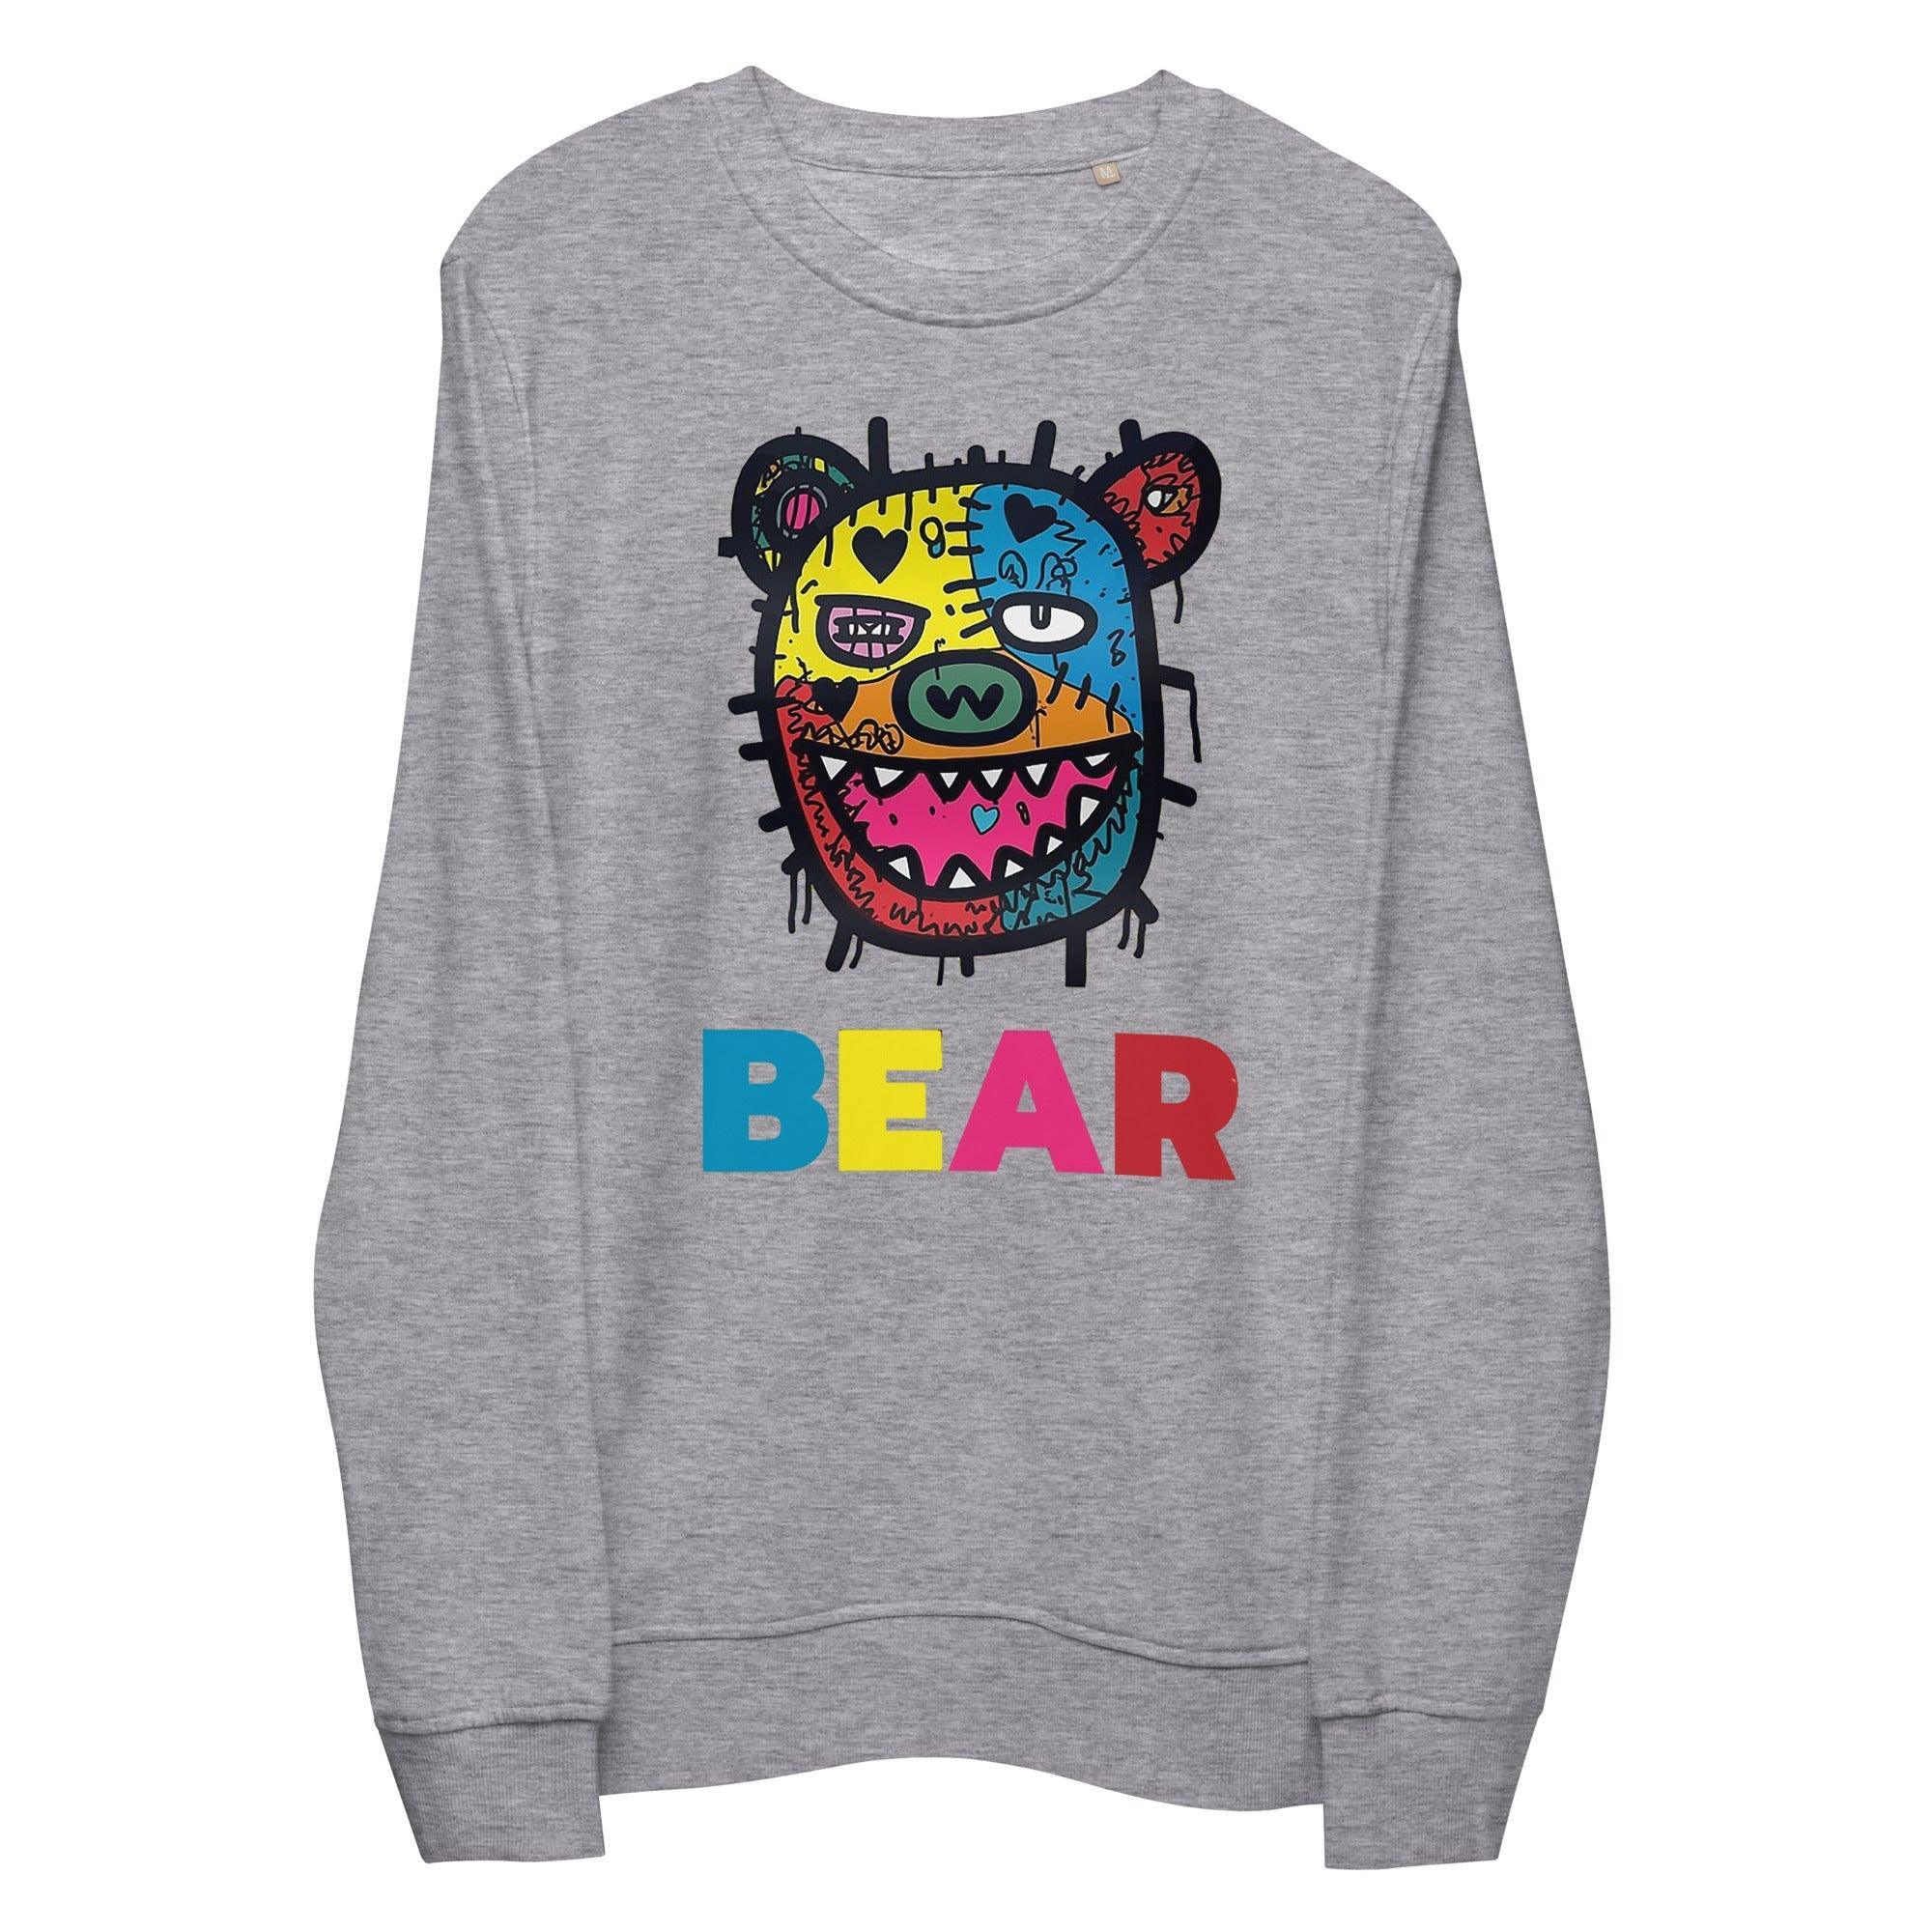 Arsty Bear Sweatshirt